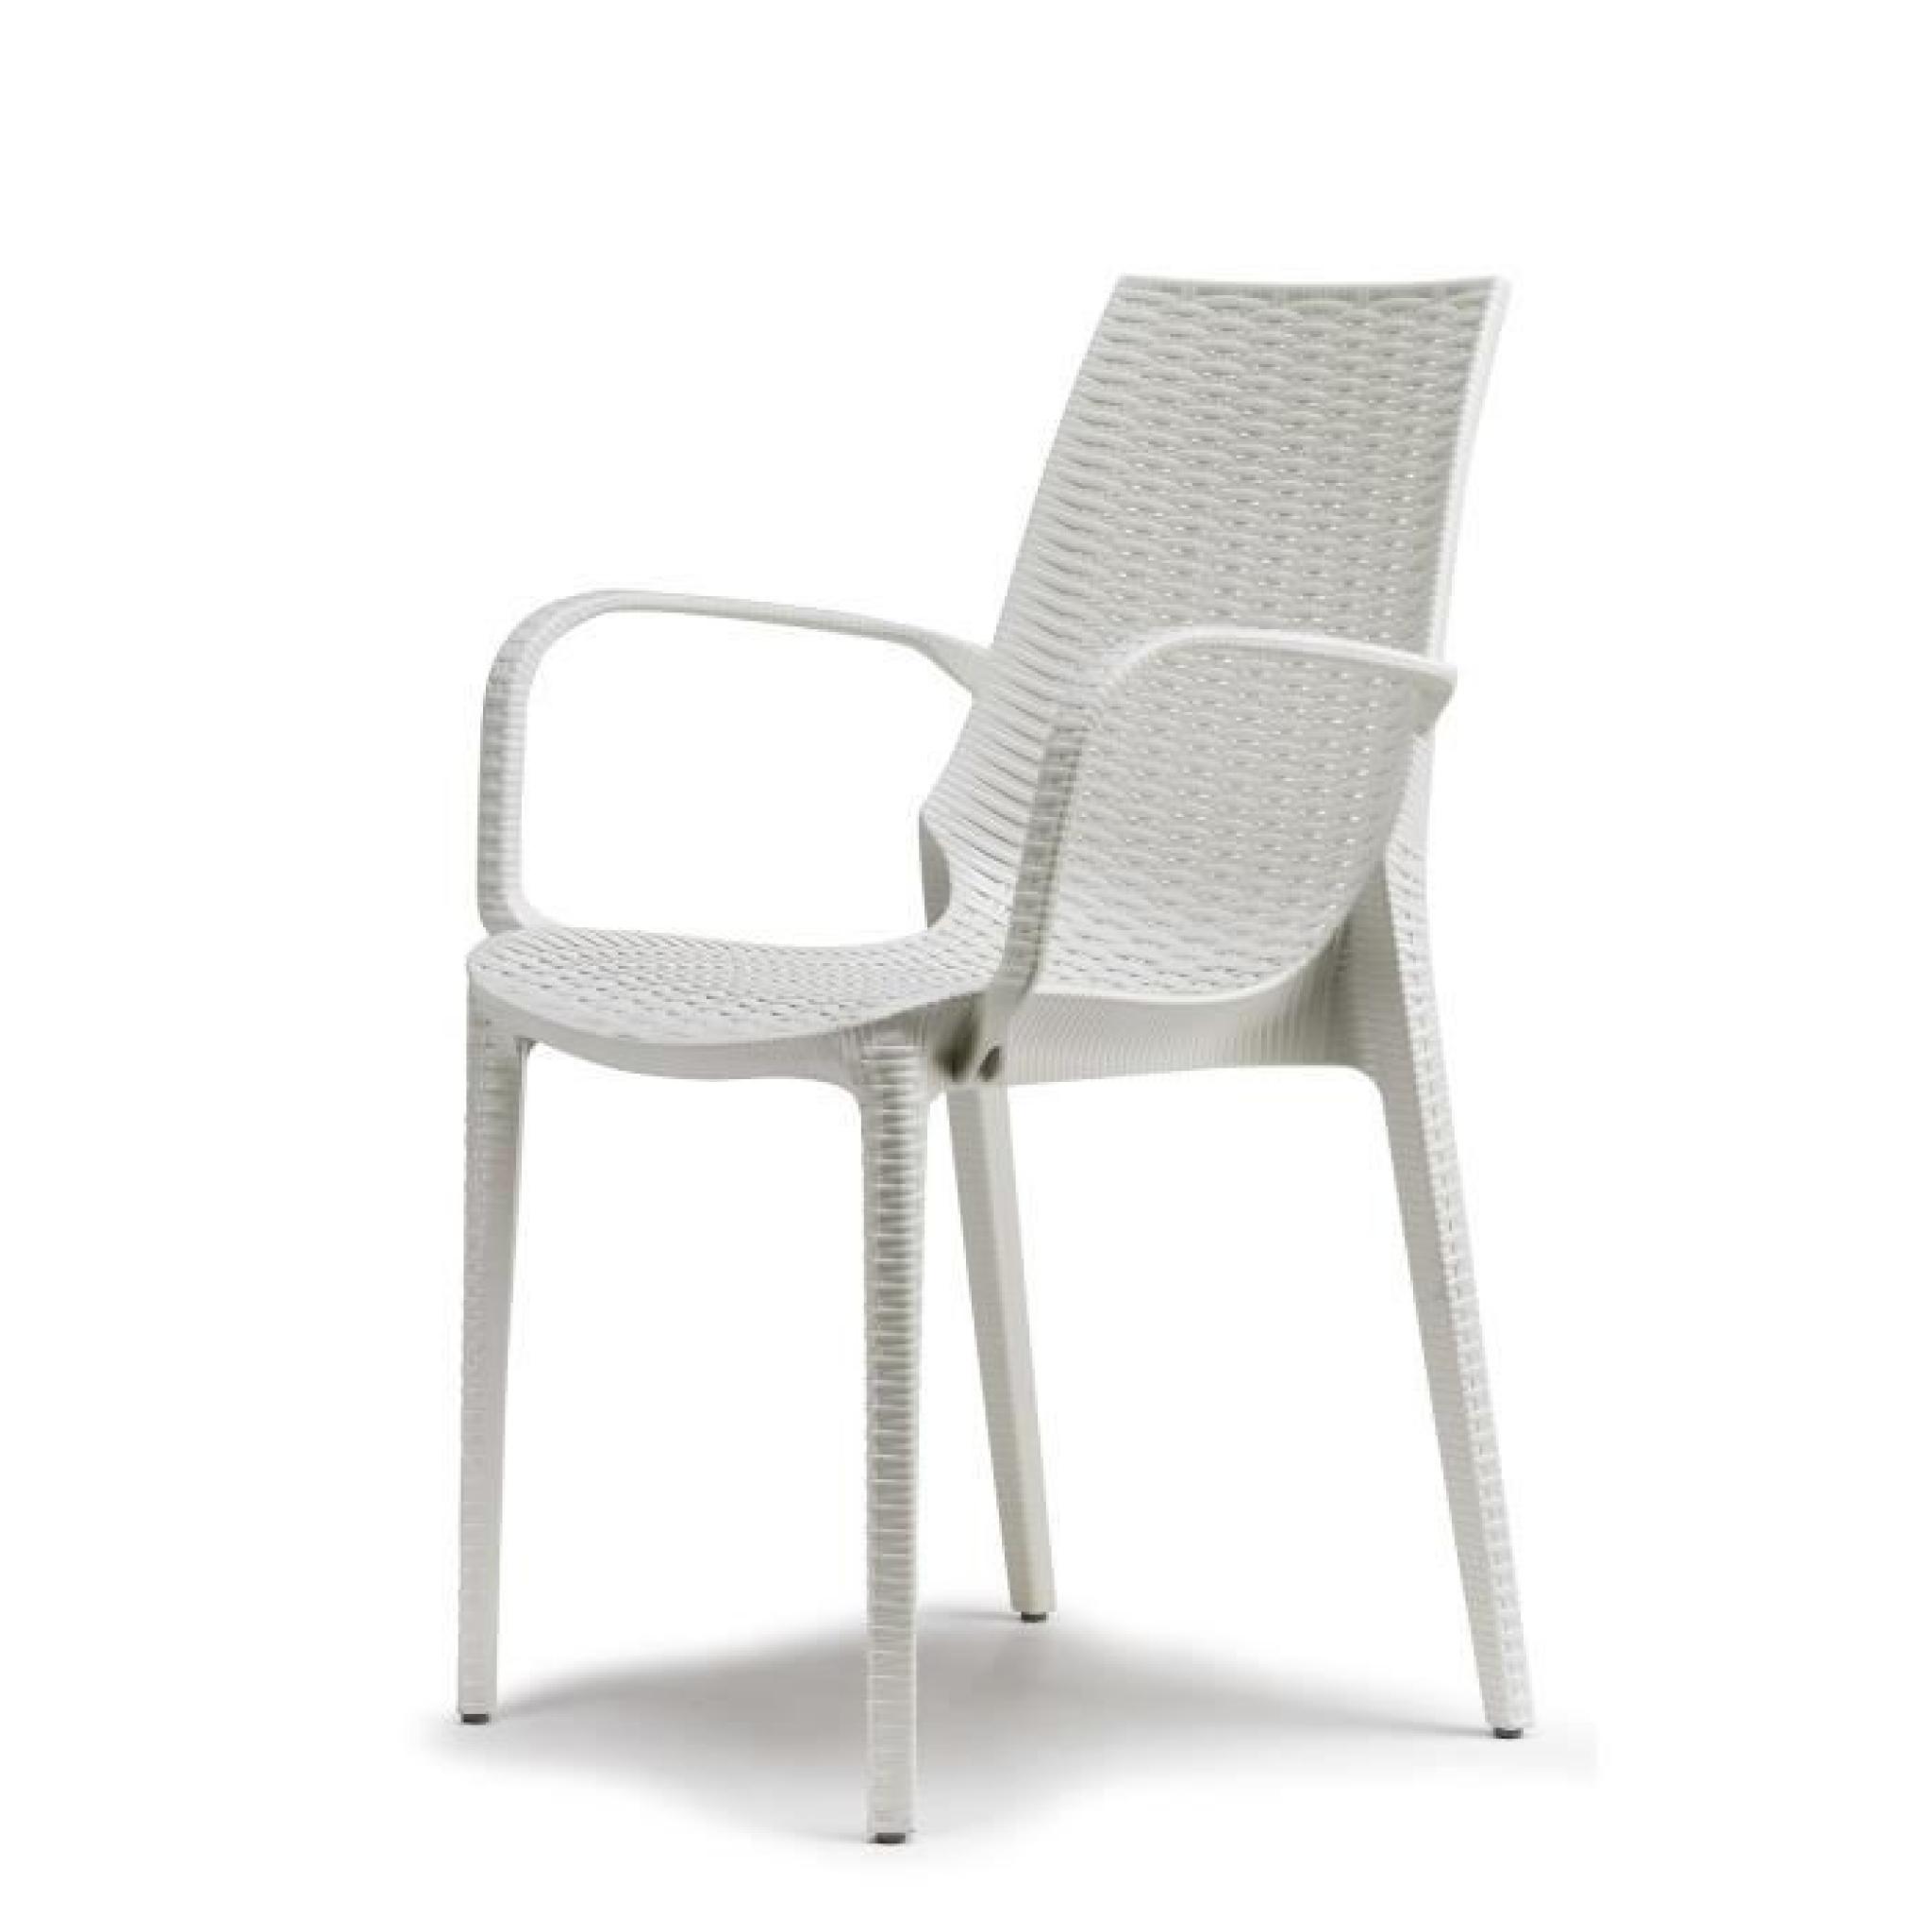 Chaise tissee blanche design - LUCREZIA avec accoudoirs blanche - deco